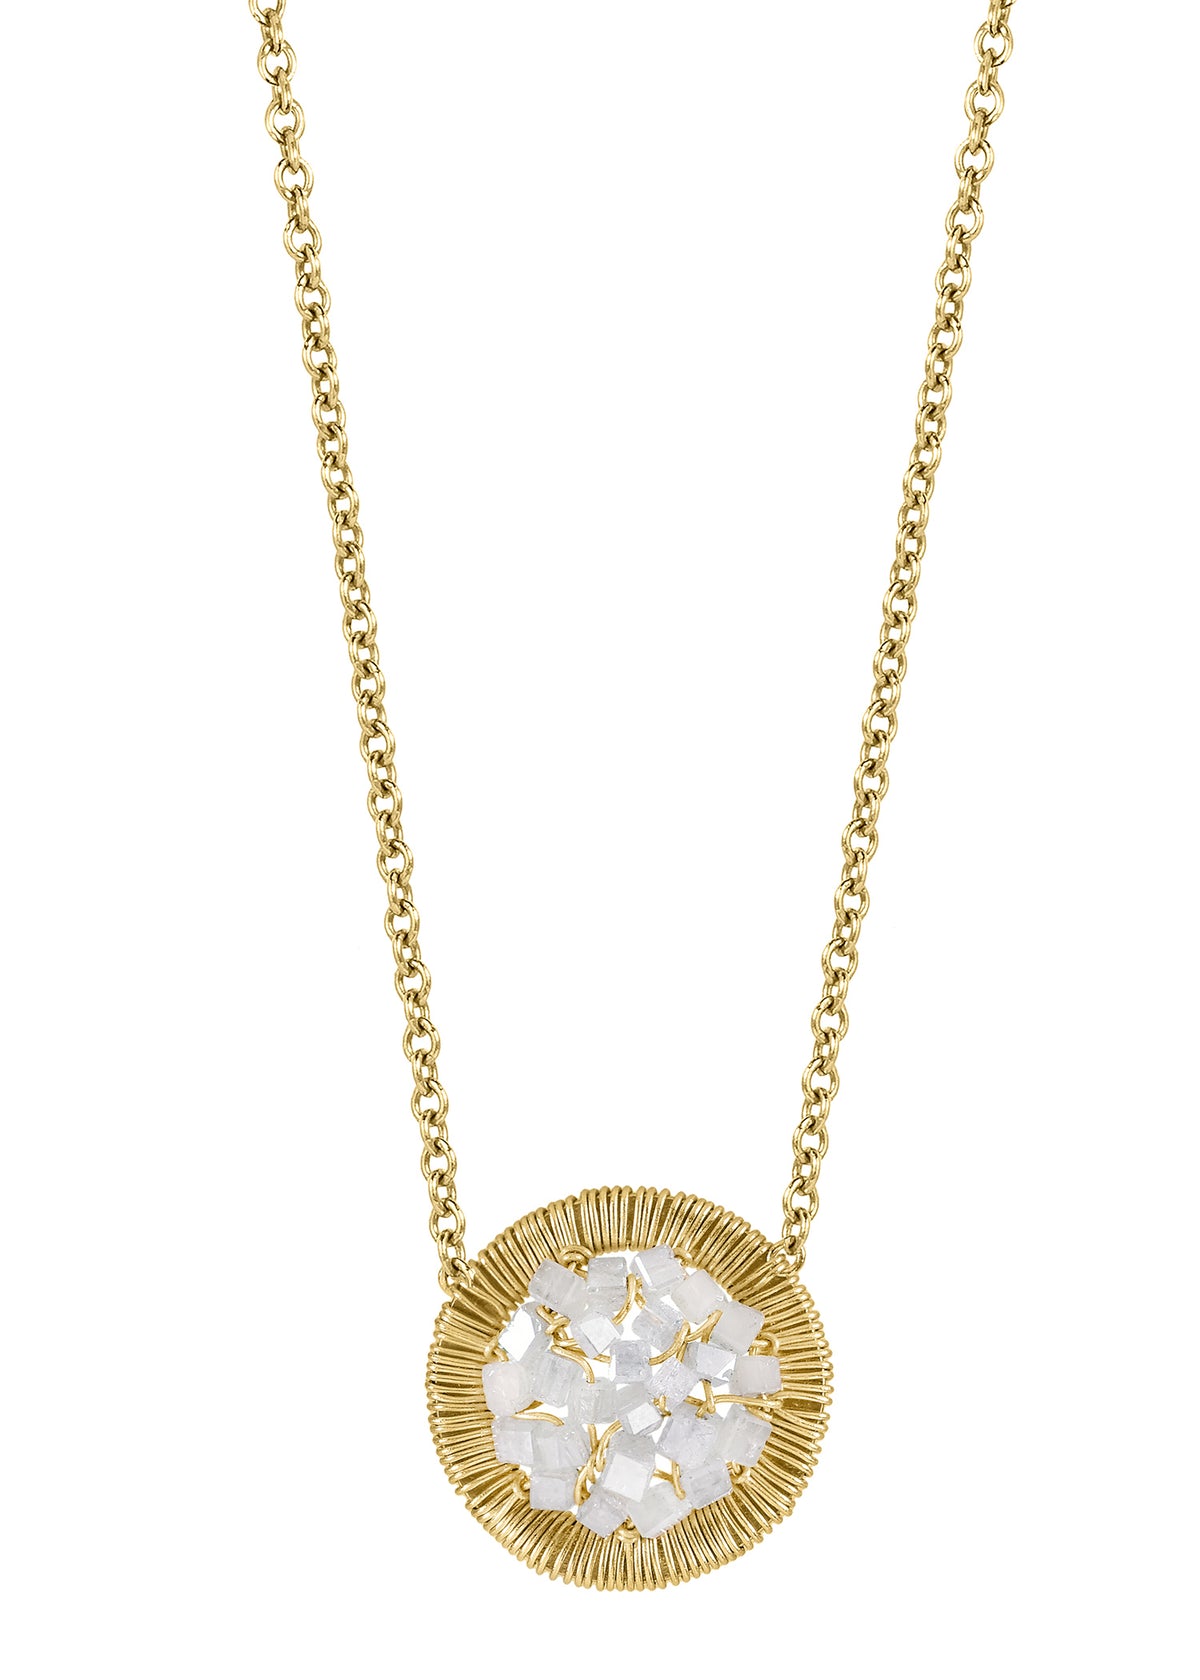 Diamond 14k gold Necklace measures 15-3/4&quot; in length Pendant measures 1/2&quot; in diameter Handmade in our Los Angeles studio